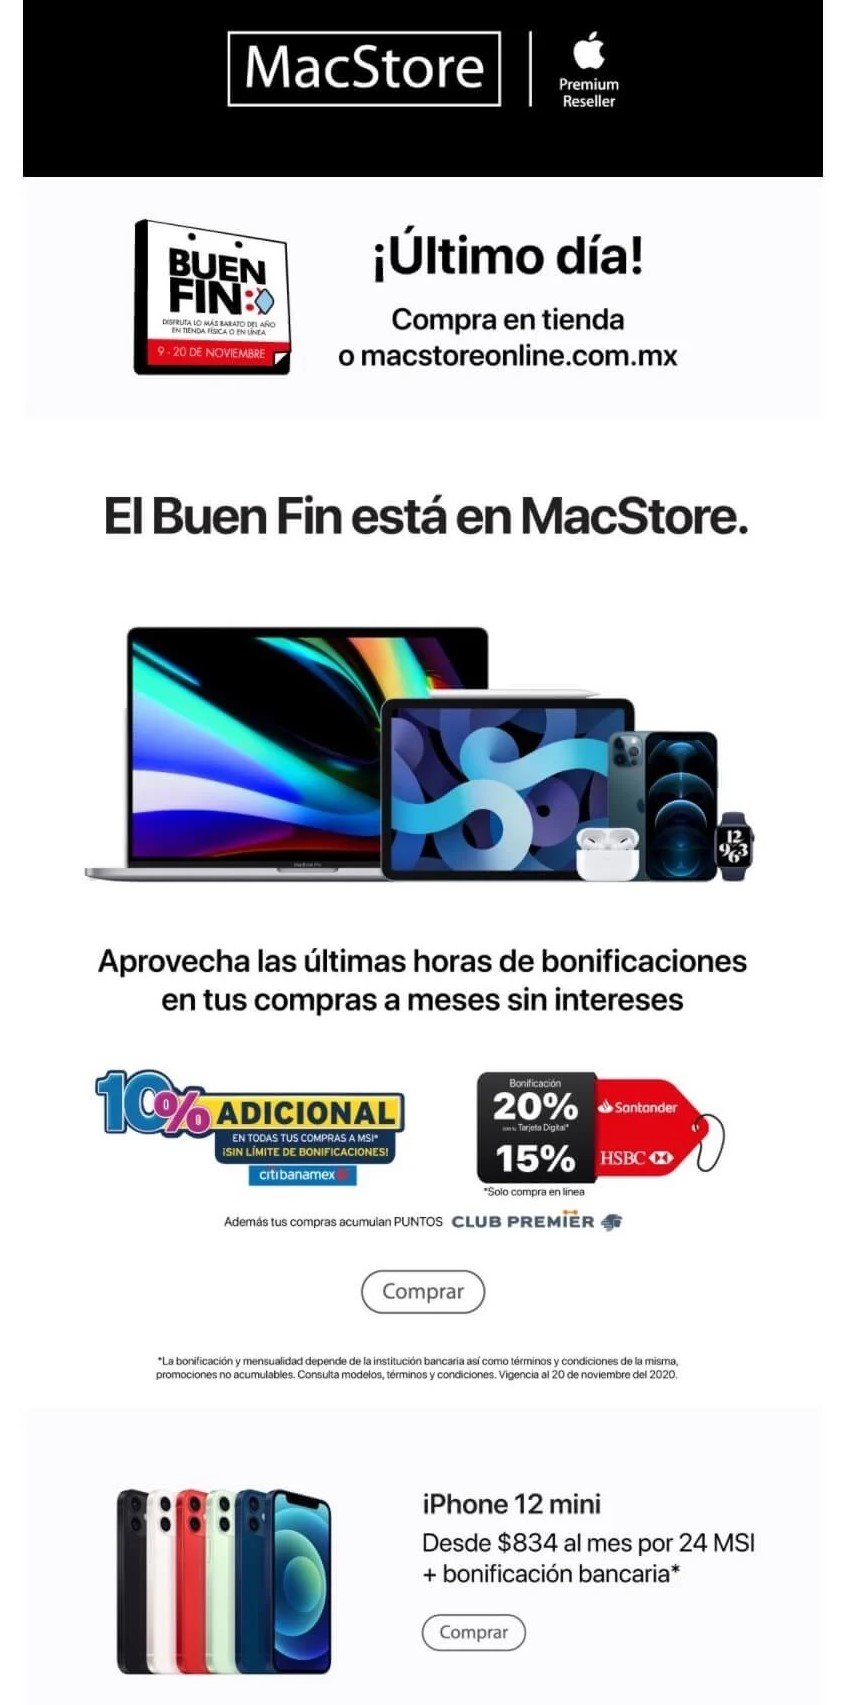 email marketing ejemplos mac store